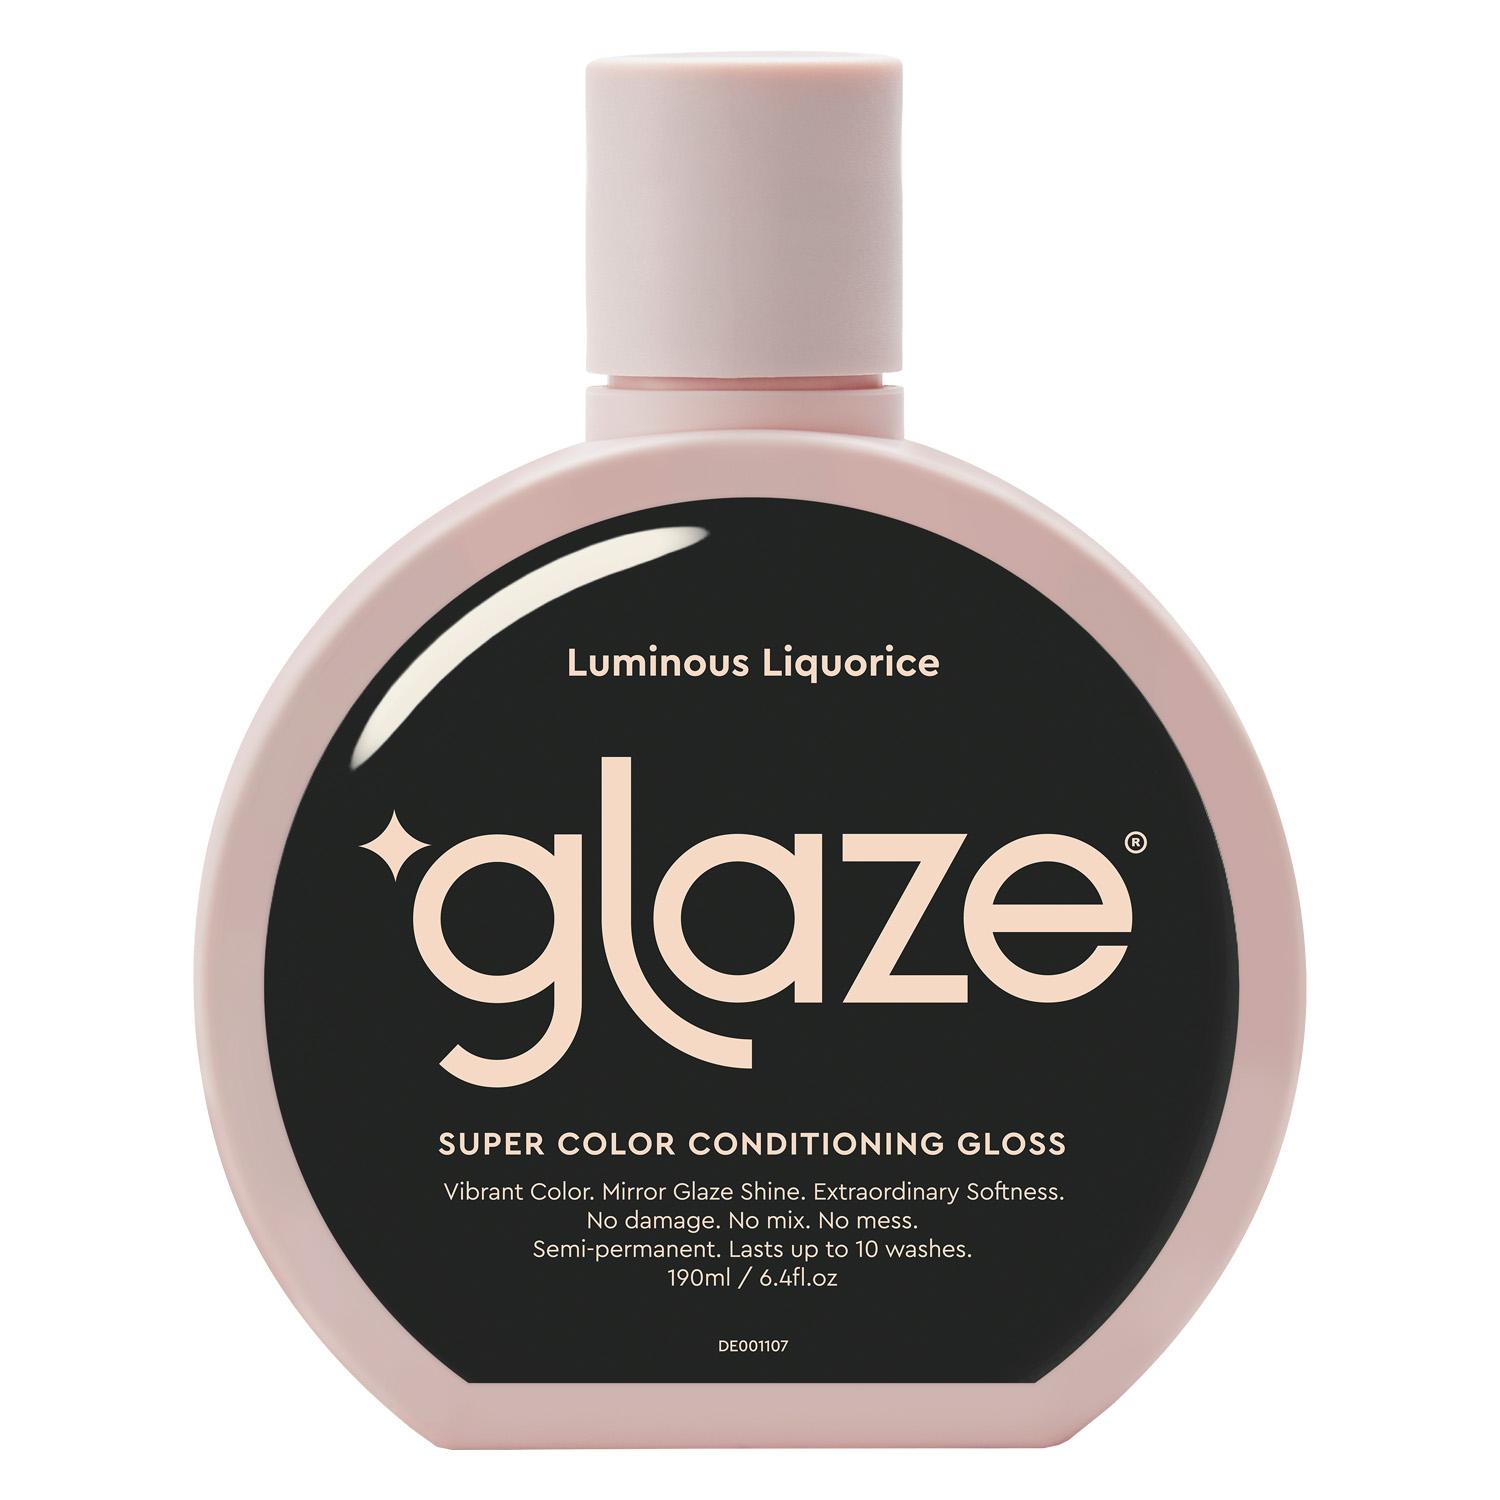 Glaze - Color Conditioning Gloss Luminous Liquorice